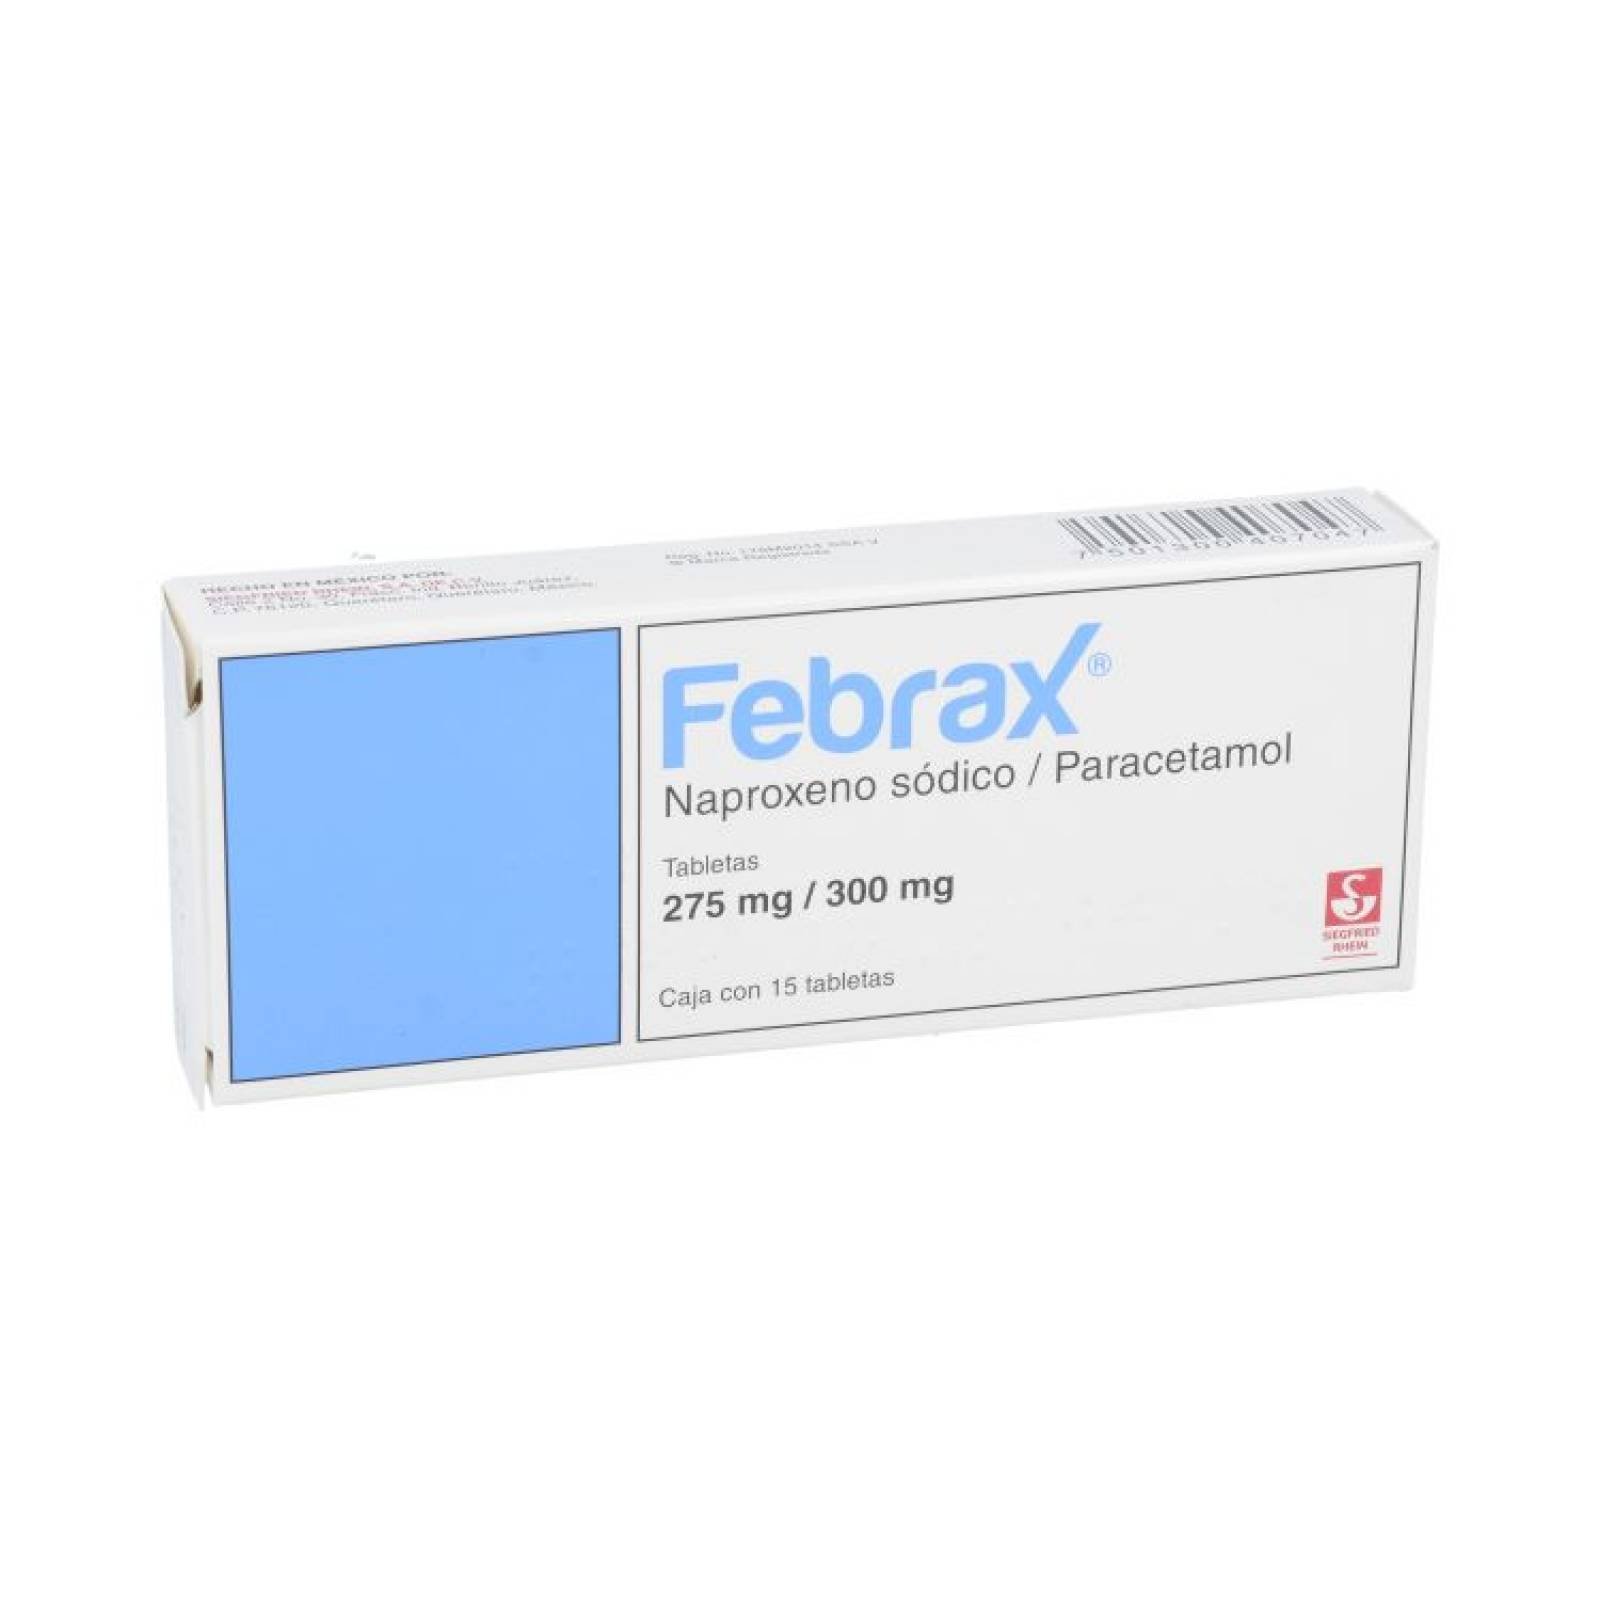 Febrax 275/300 Mg Caja 15 Tabletas